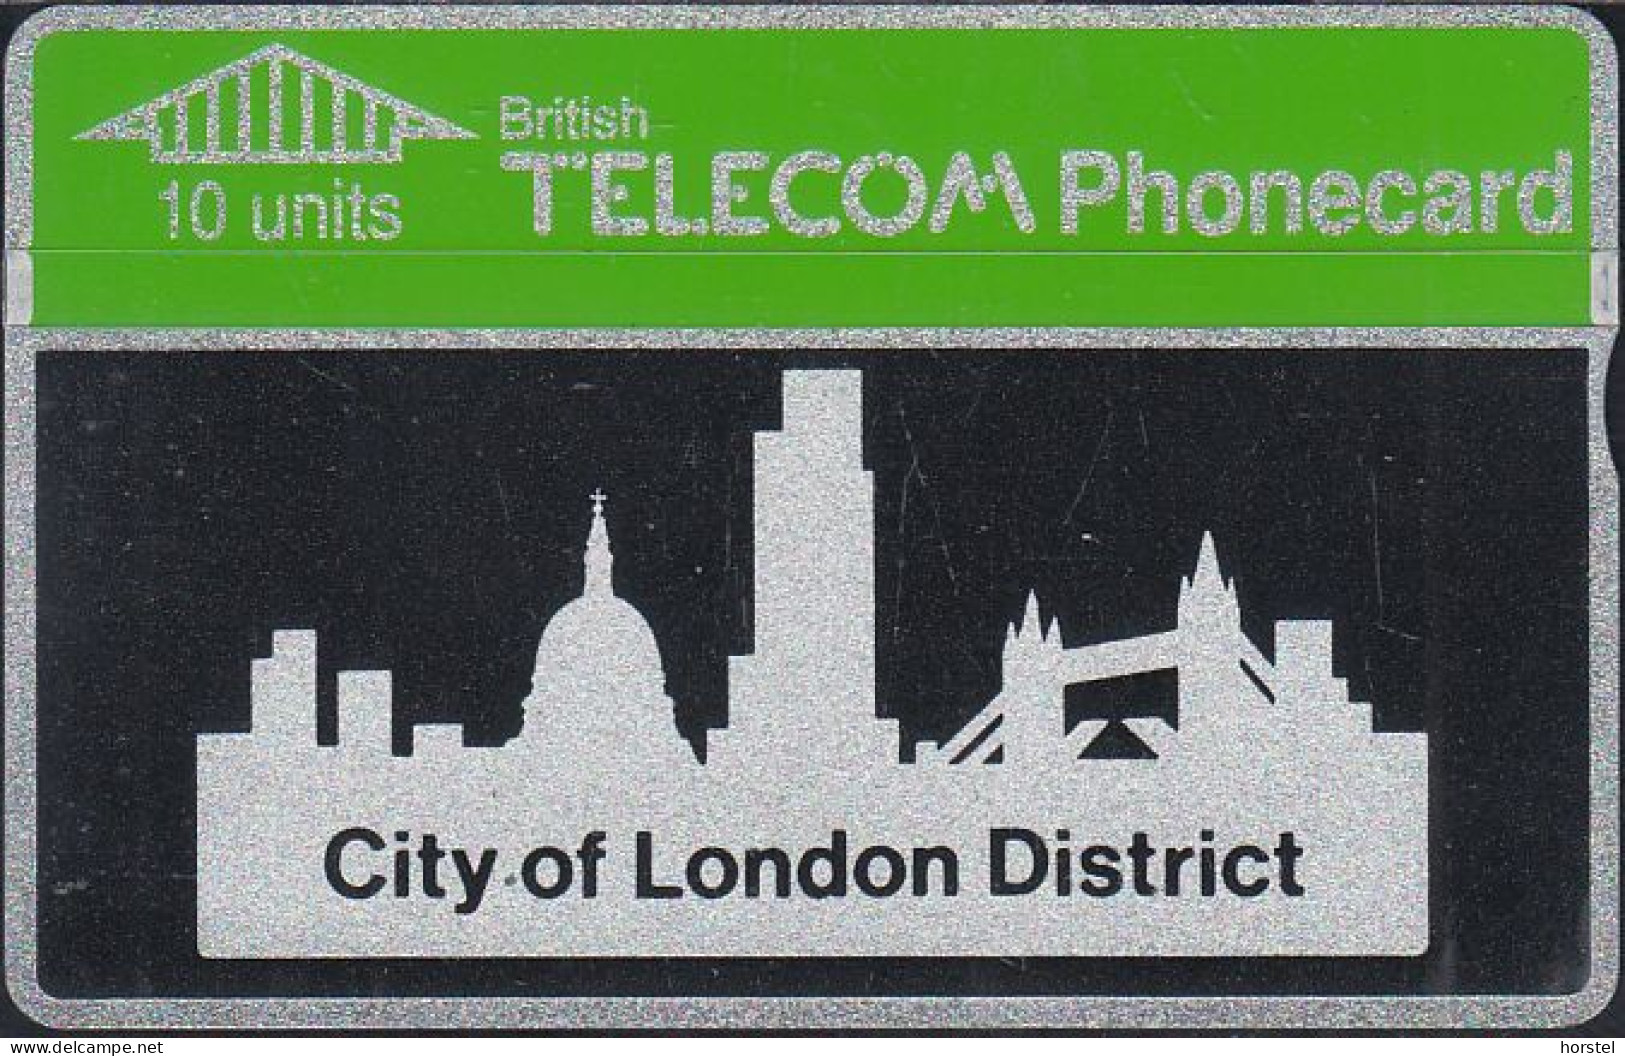 UK British Telecom Phonecard - L&G Bti 0004 - 10 Units - City Of London District - 123A - Mint - BT Emissions Internes